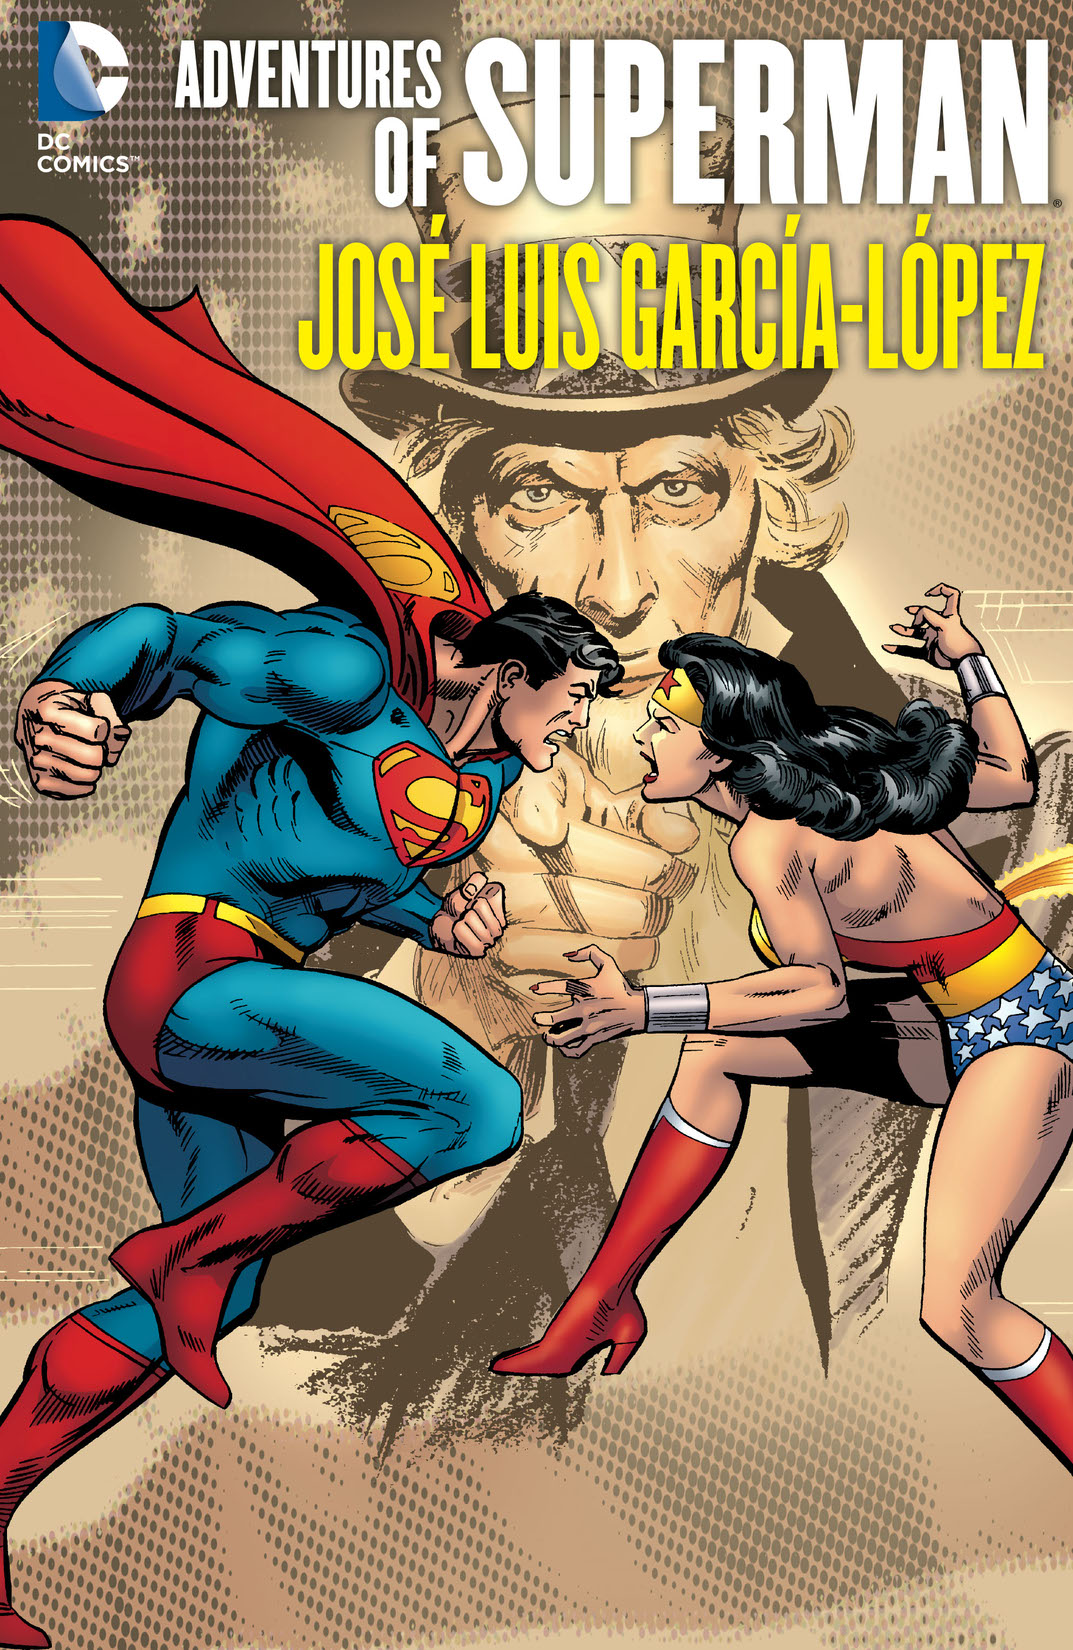 Adventures of Superman: Jose Luis Garcia-Lopez preview images